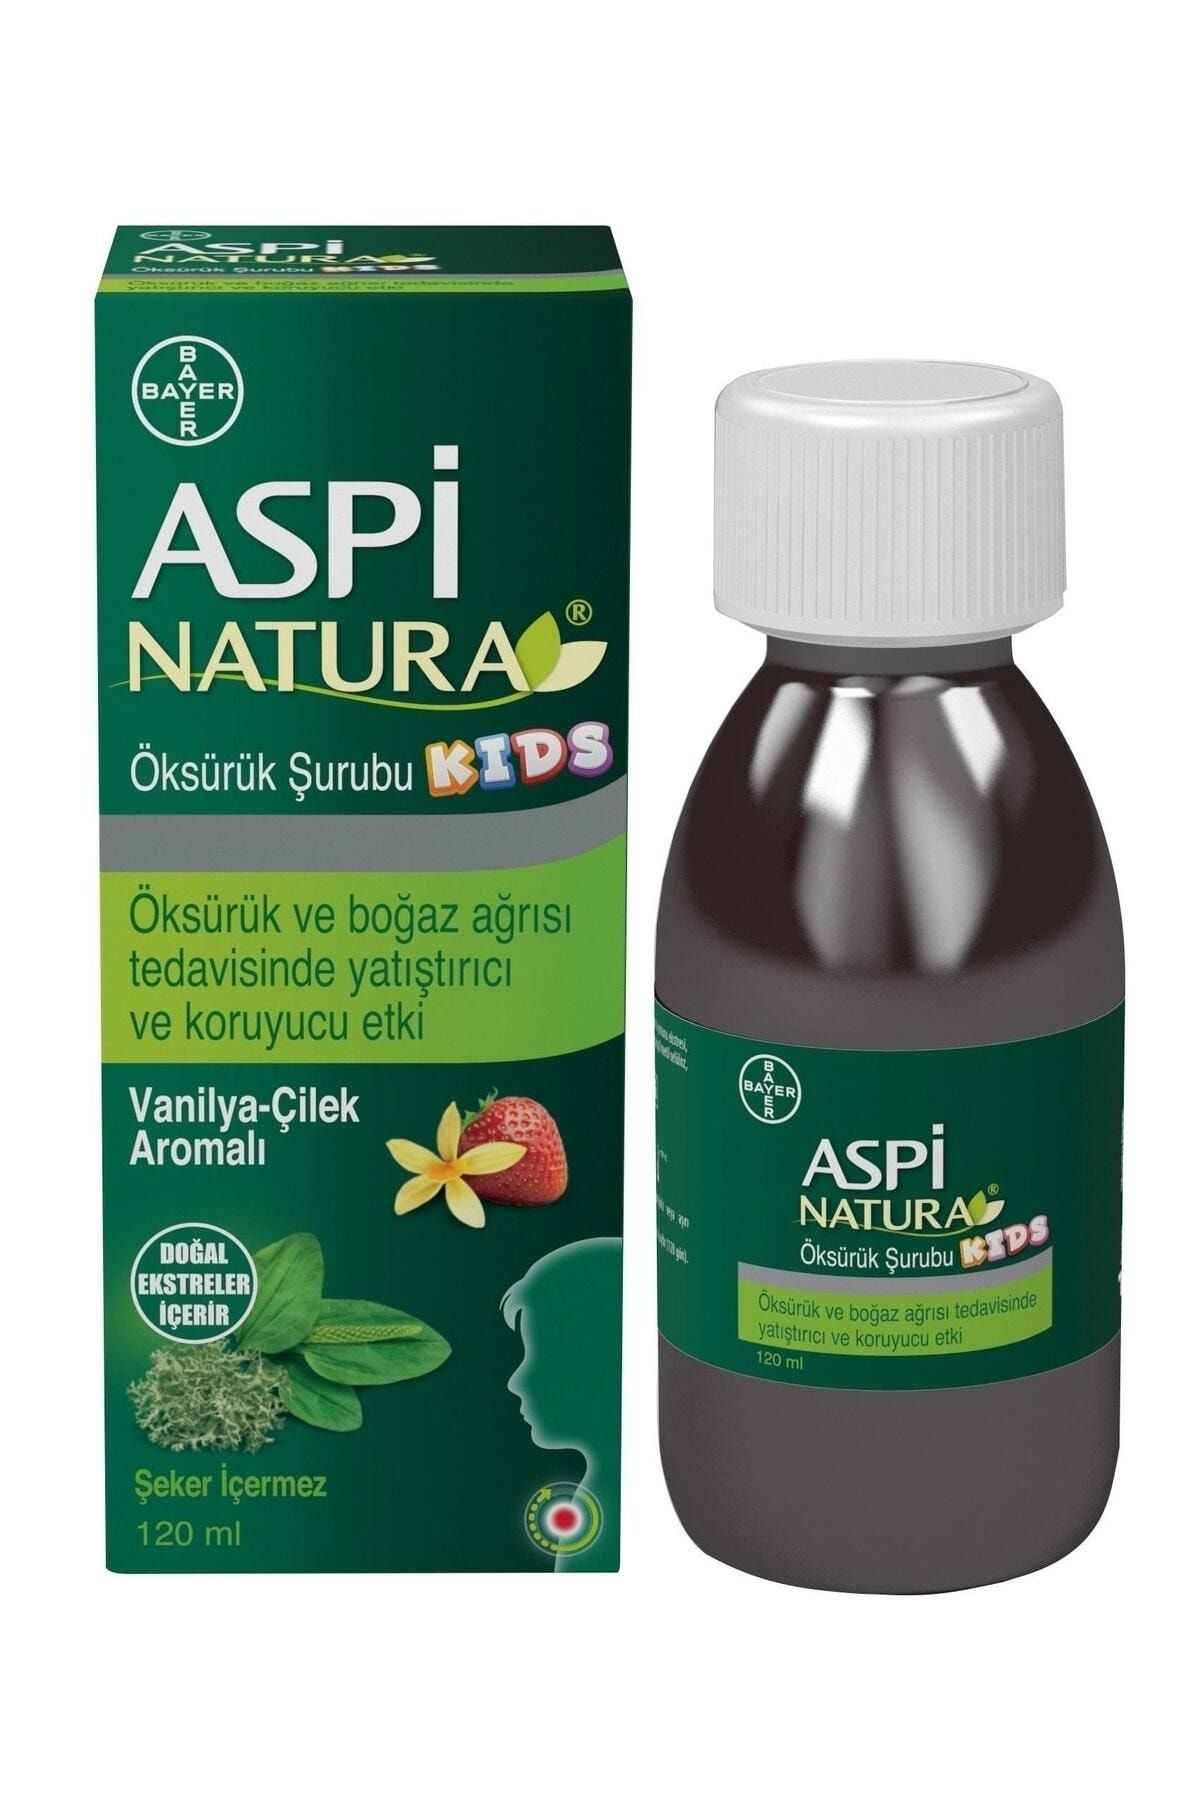 Aspinatura Aspi Natura Kids Öksürük Şurubu 120 ml Fiyatı, Yorumları -  Trendyol